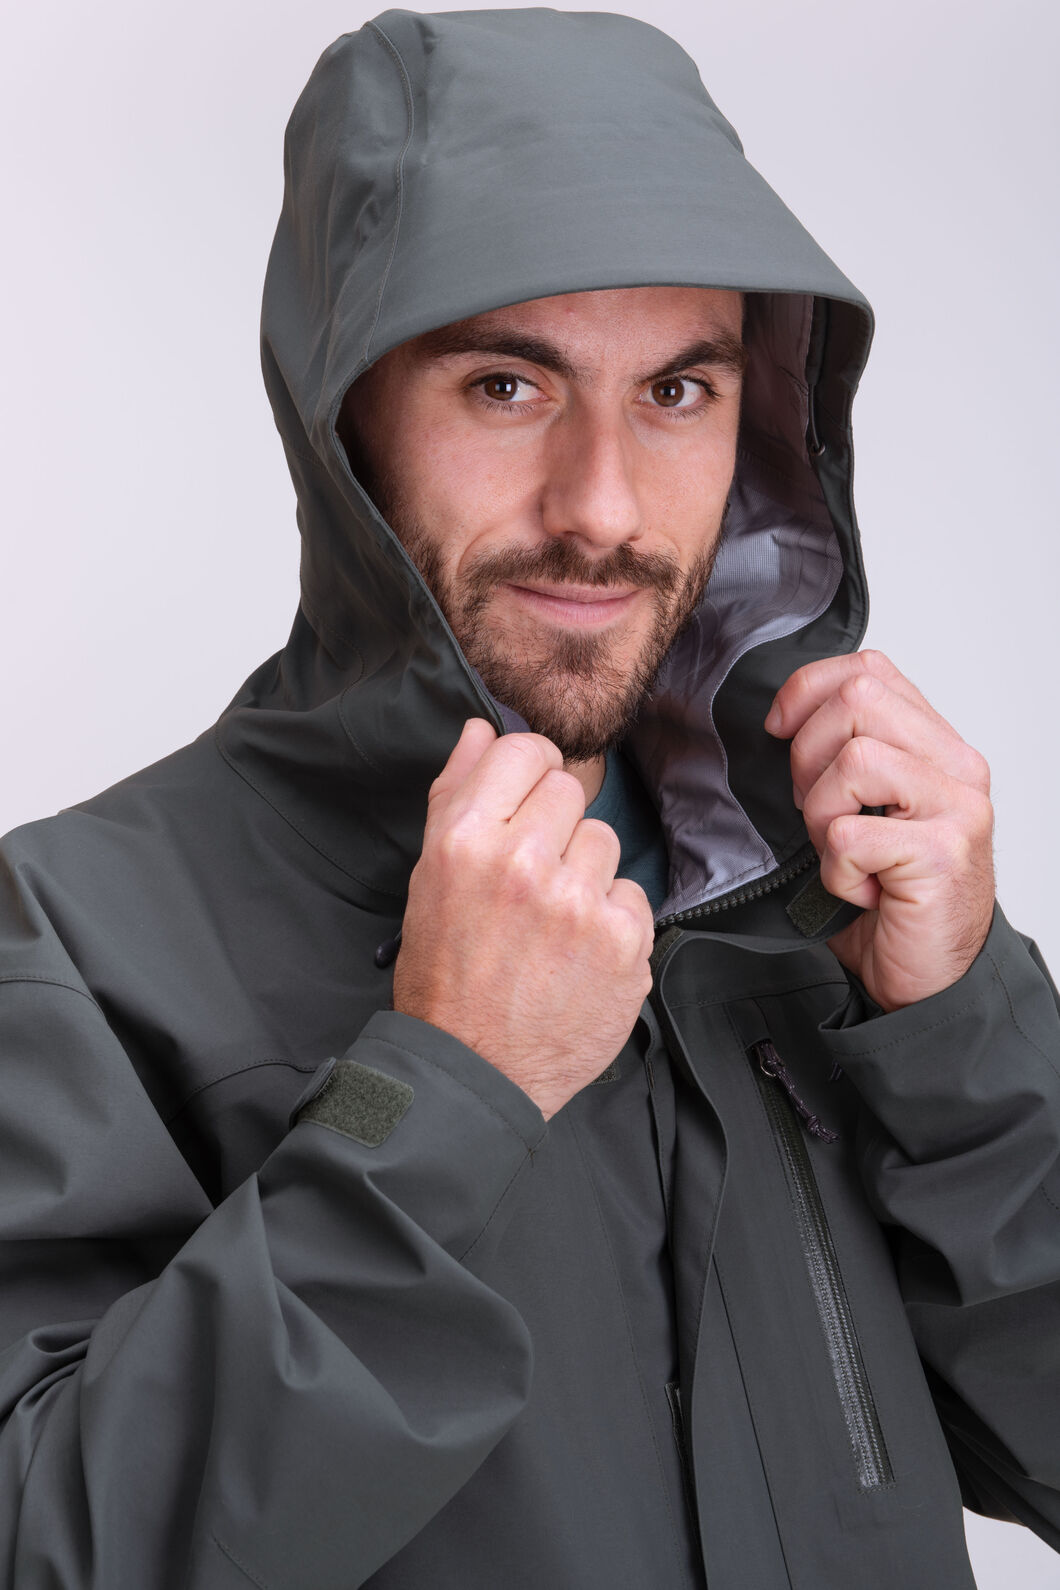 Rain Jackets & Raincoats For Men Online Australia